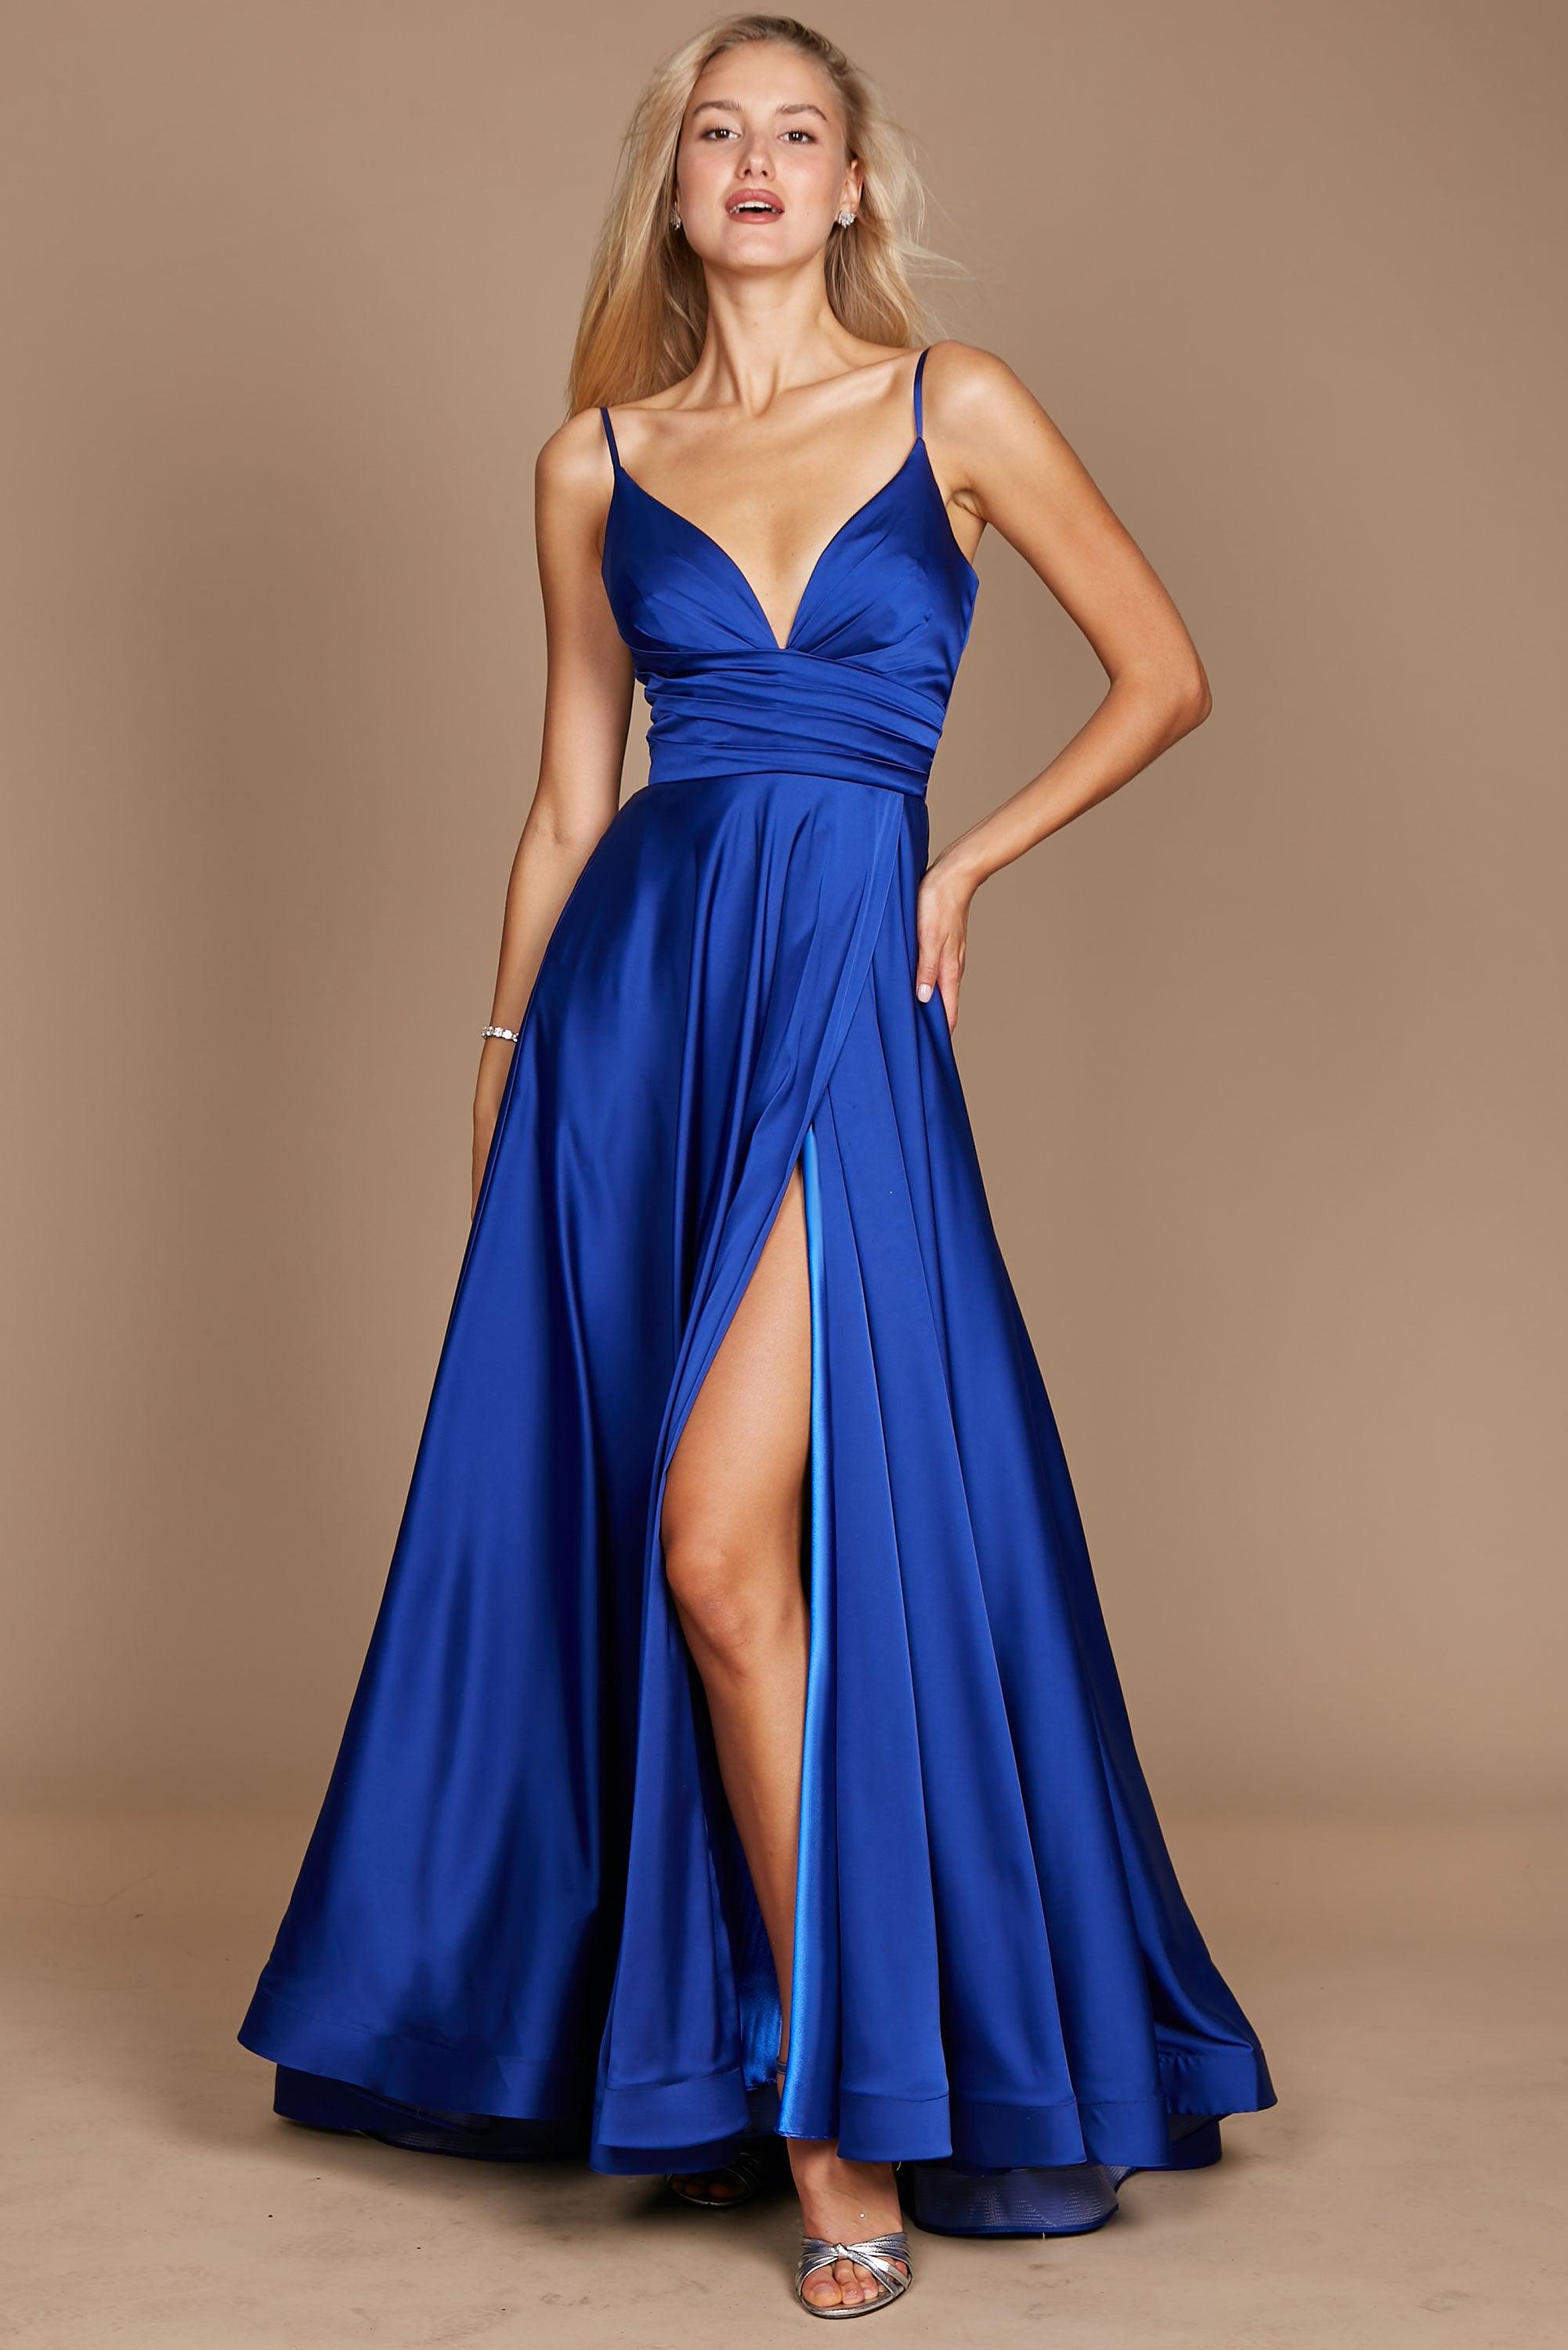 royal blue dress for wedding